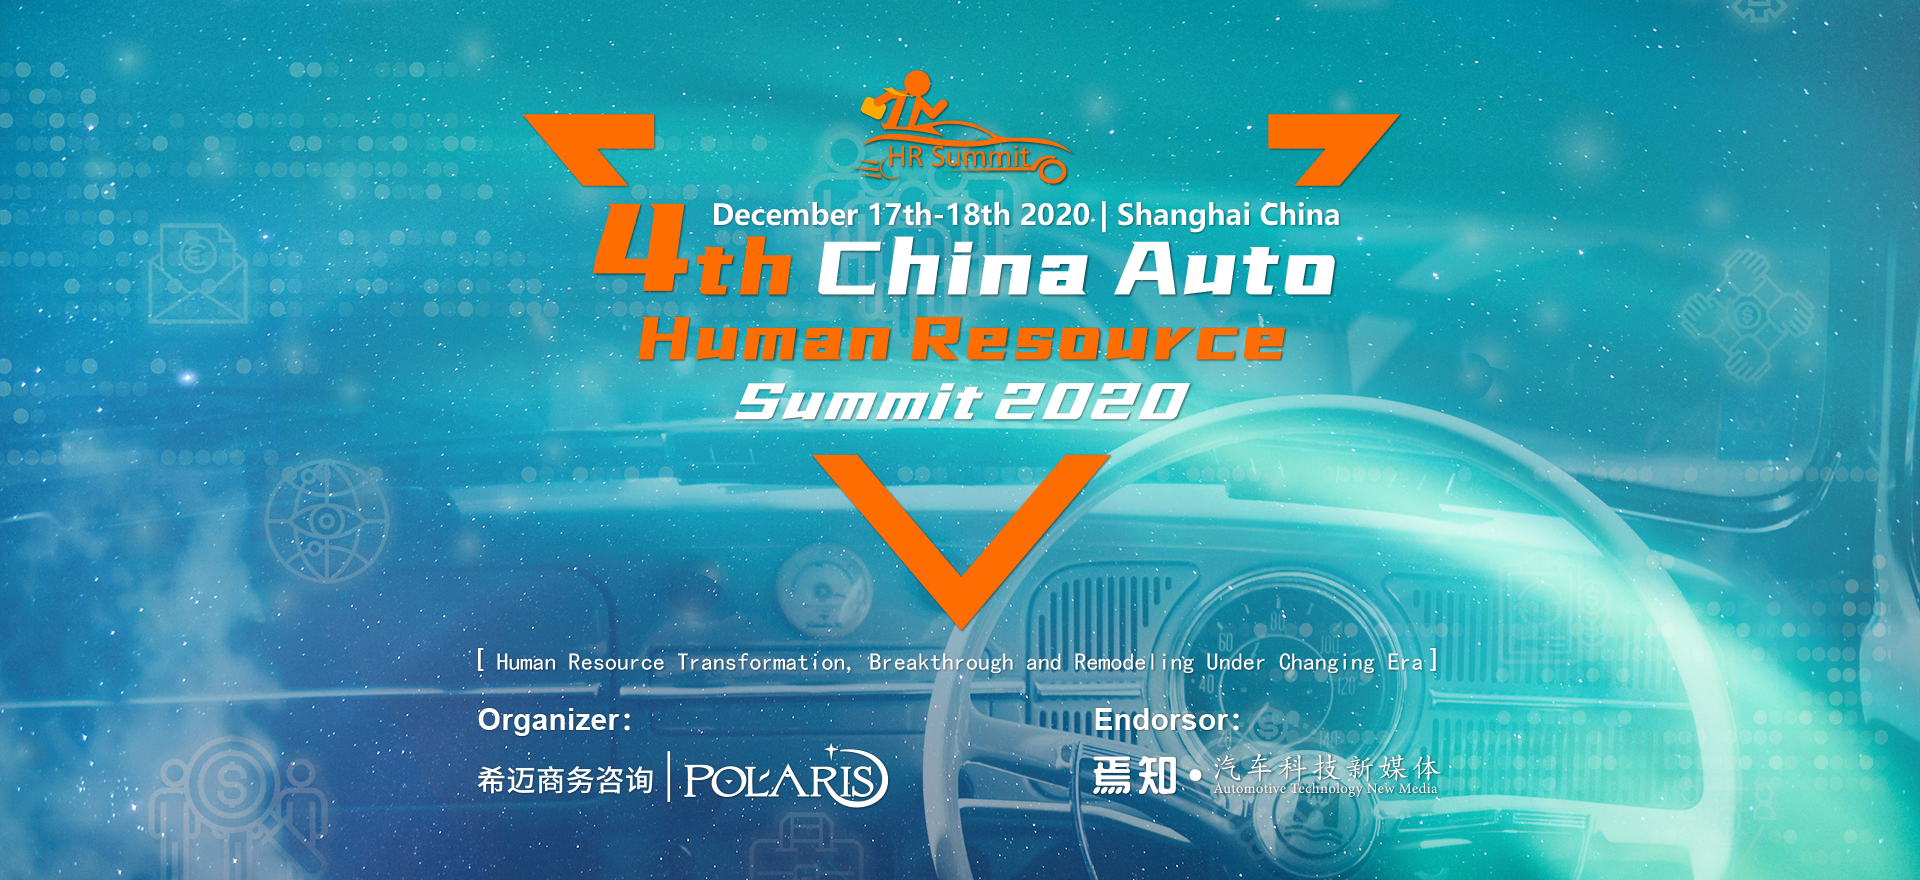 4th China Auto Human Resource Summit 2020